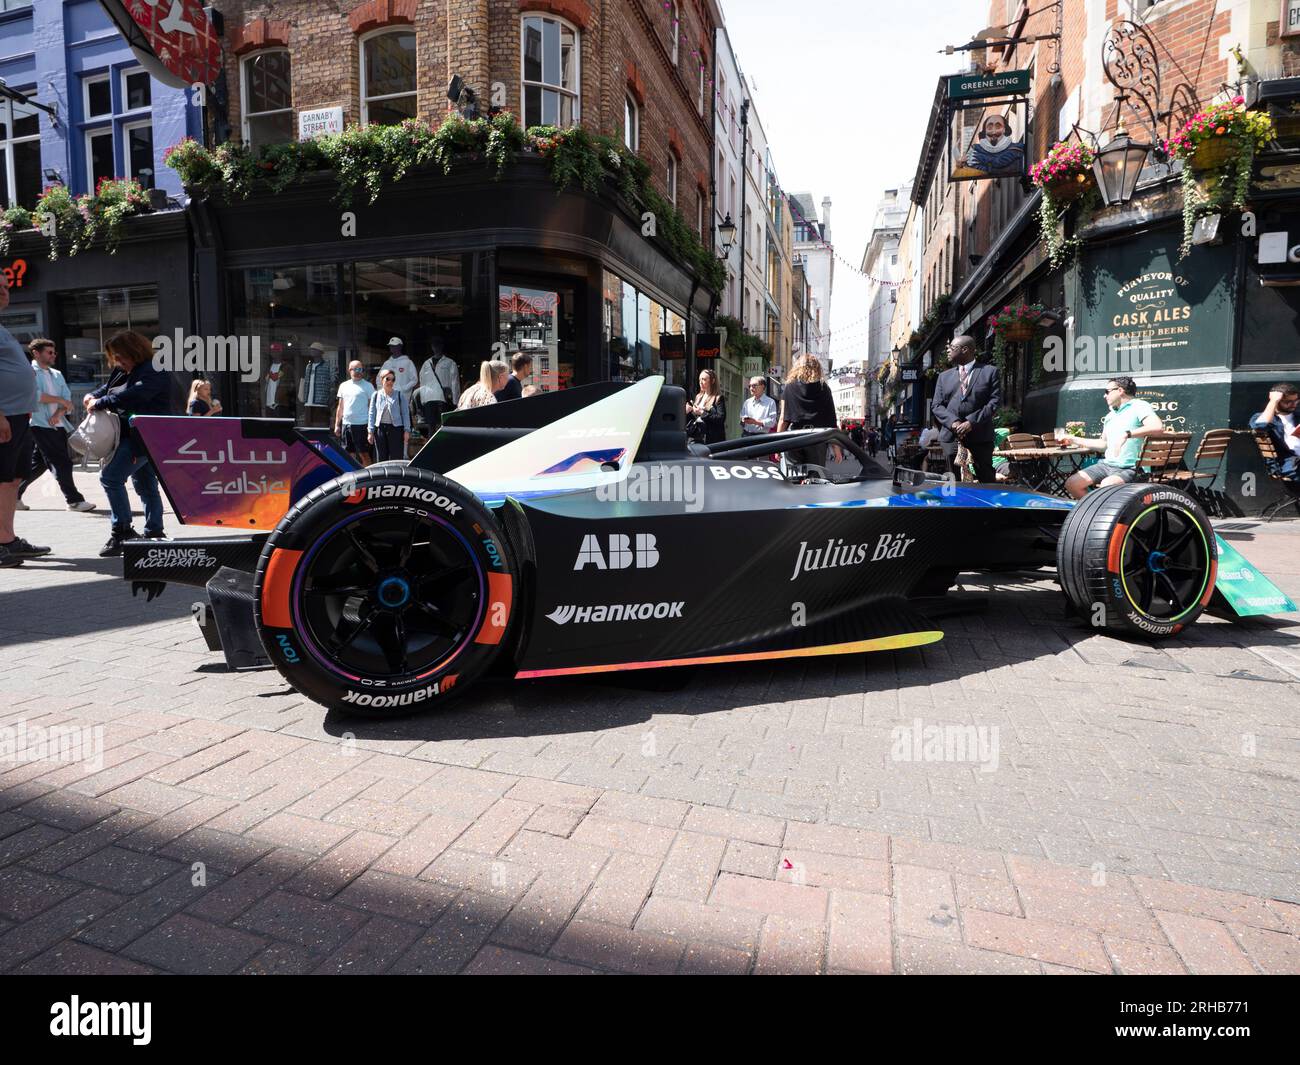 Julius Bar, ABB, and Hankook logos on Formula E electric street racing series car on display in Carnaby Street London Stock Photo